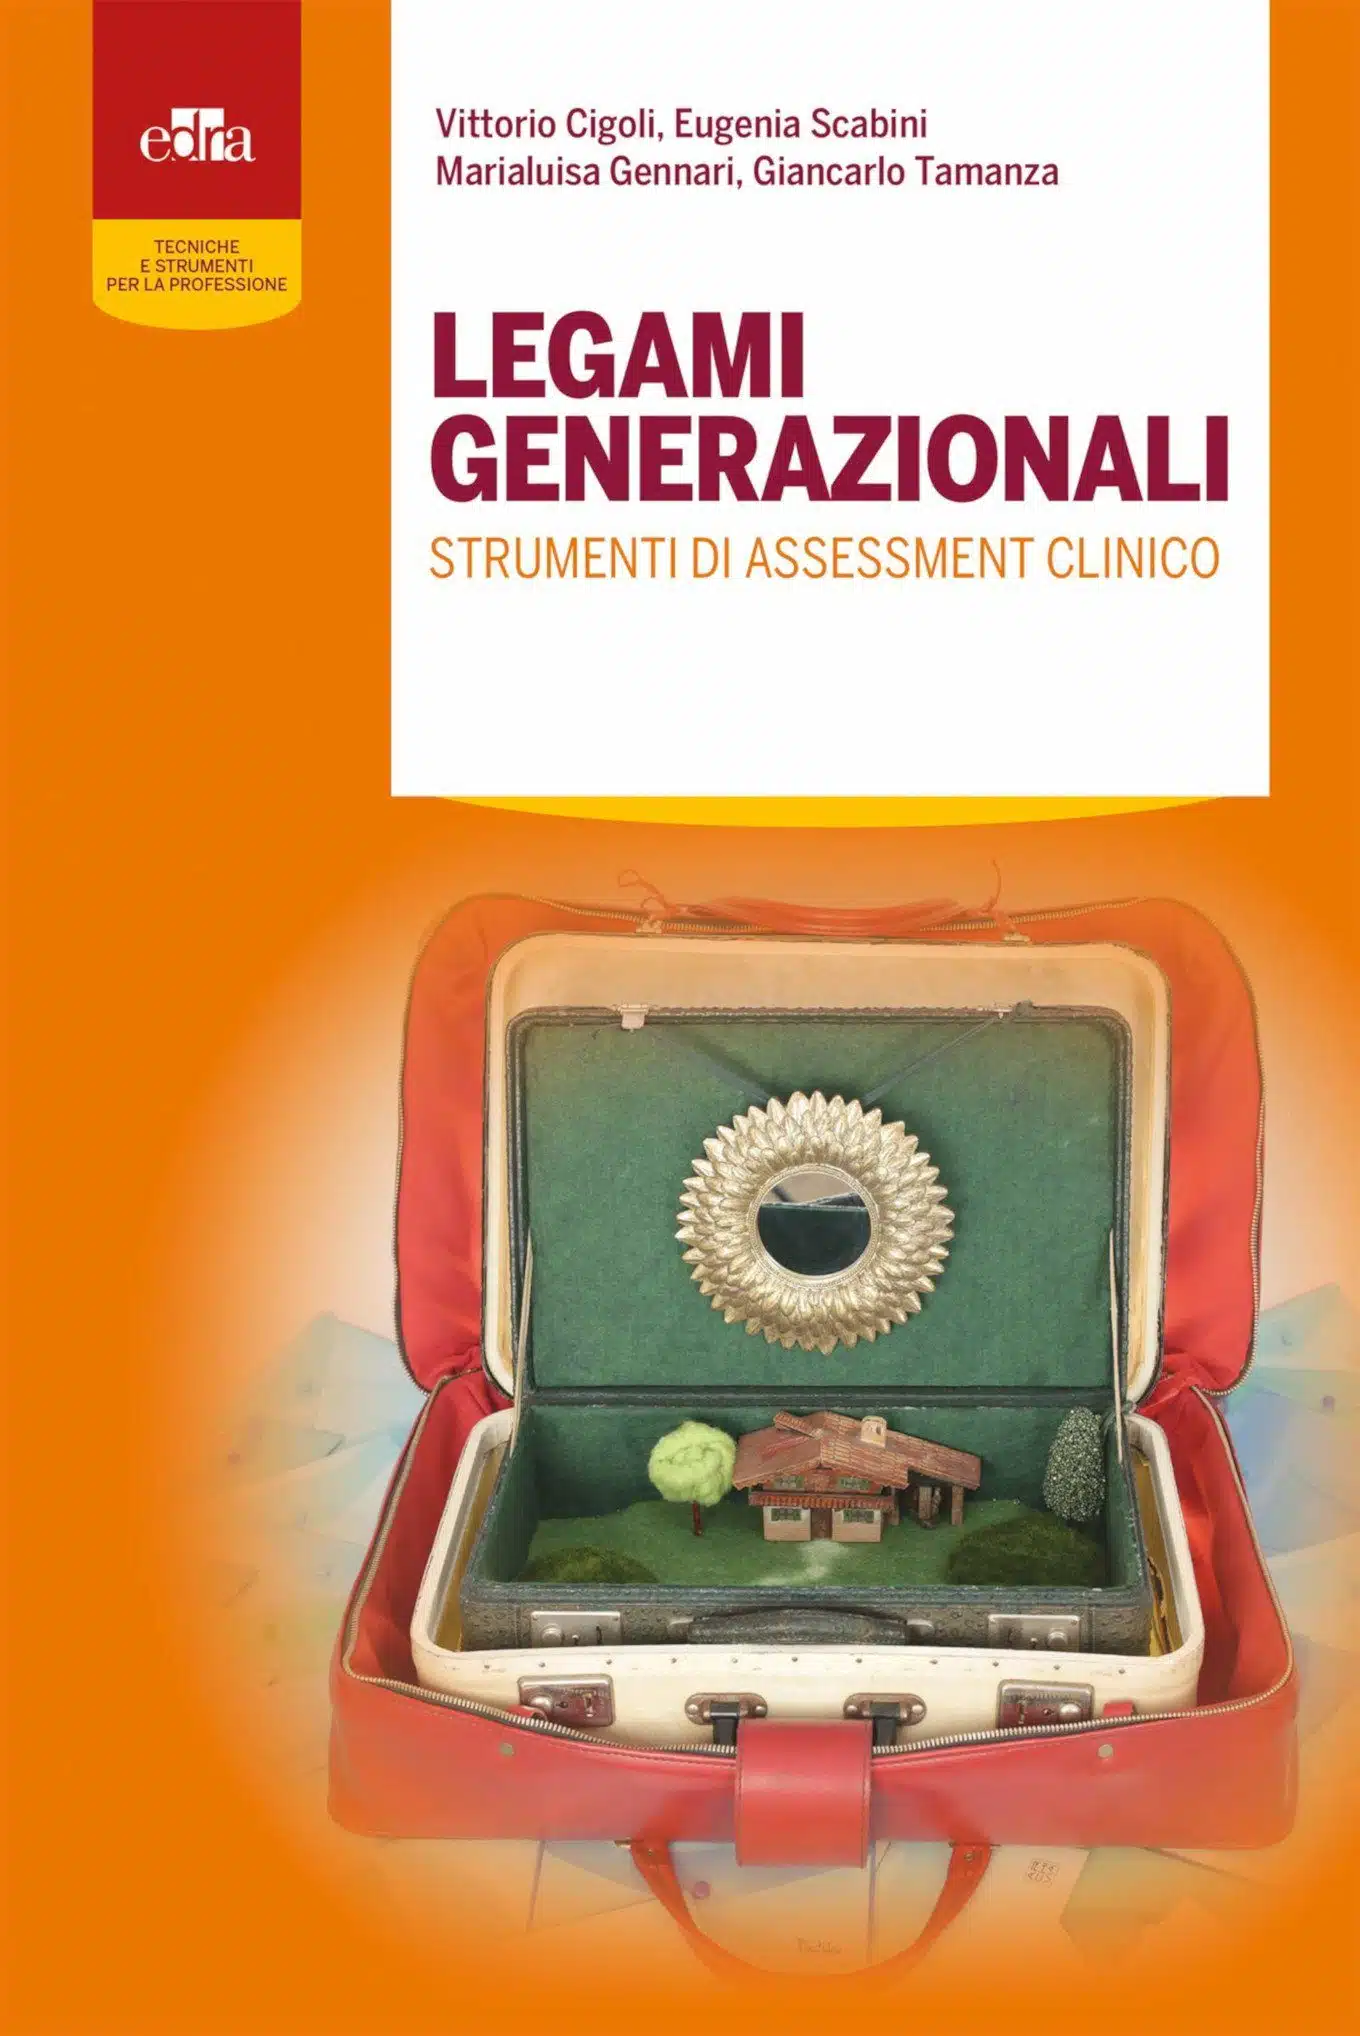 Legami generazionali. Strumenti di assessment clinico (2018) -Recensione FEAT